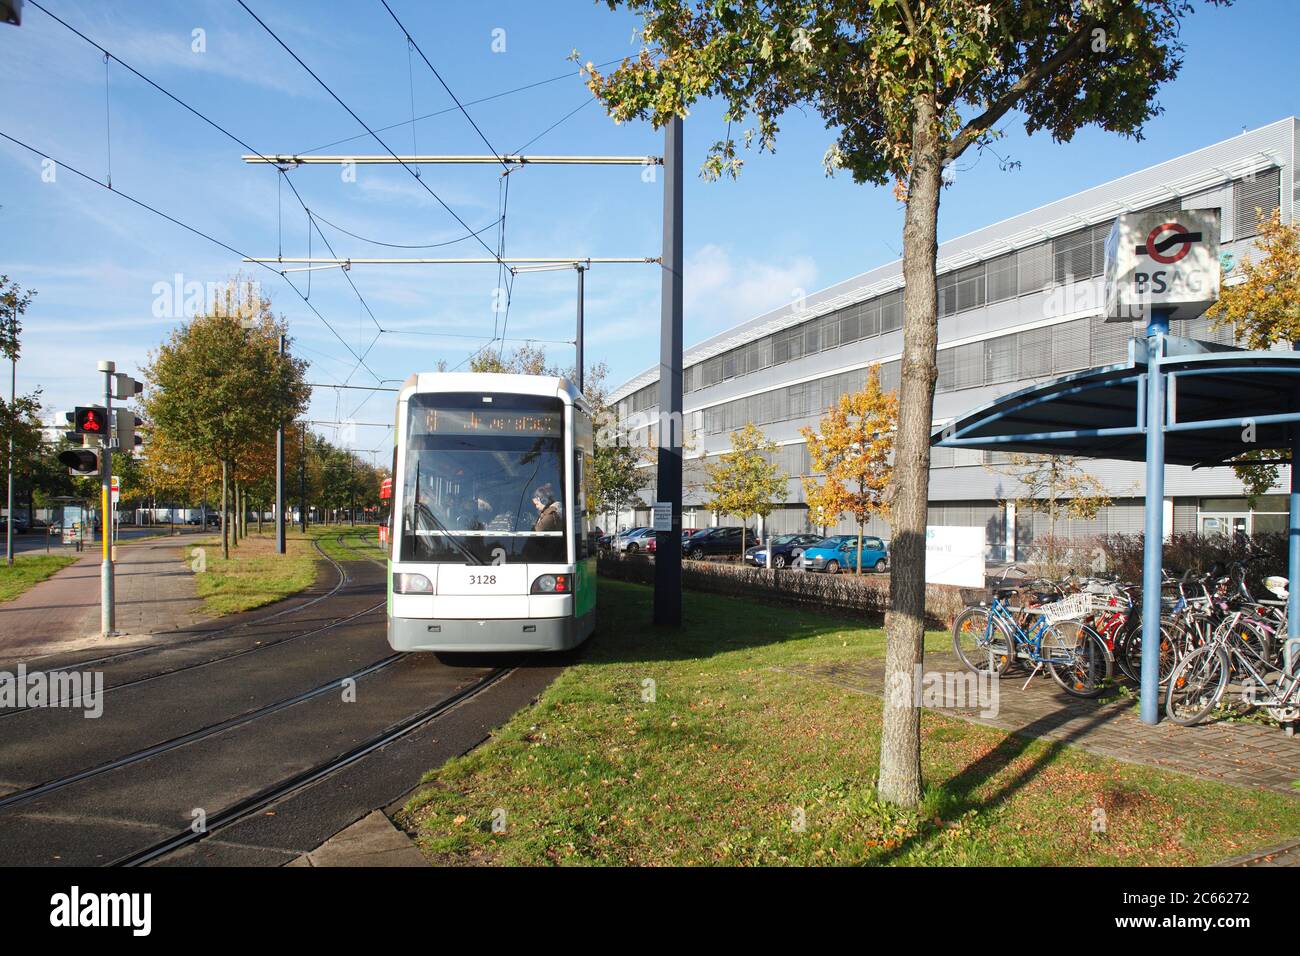 Tram, Siemens Building, Technology Center, Technology Park, Brême, Allemagne, Europe Banque D'Images